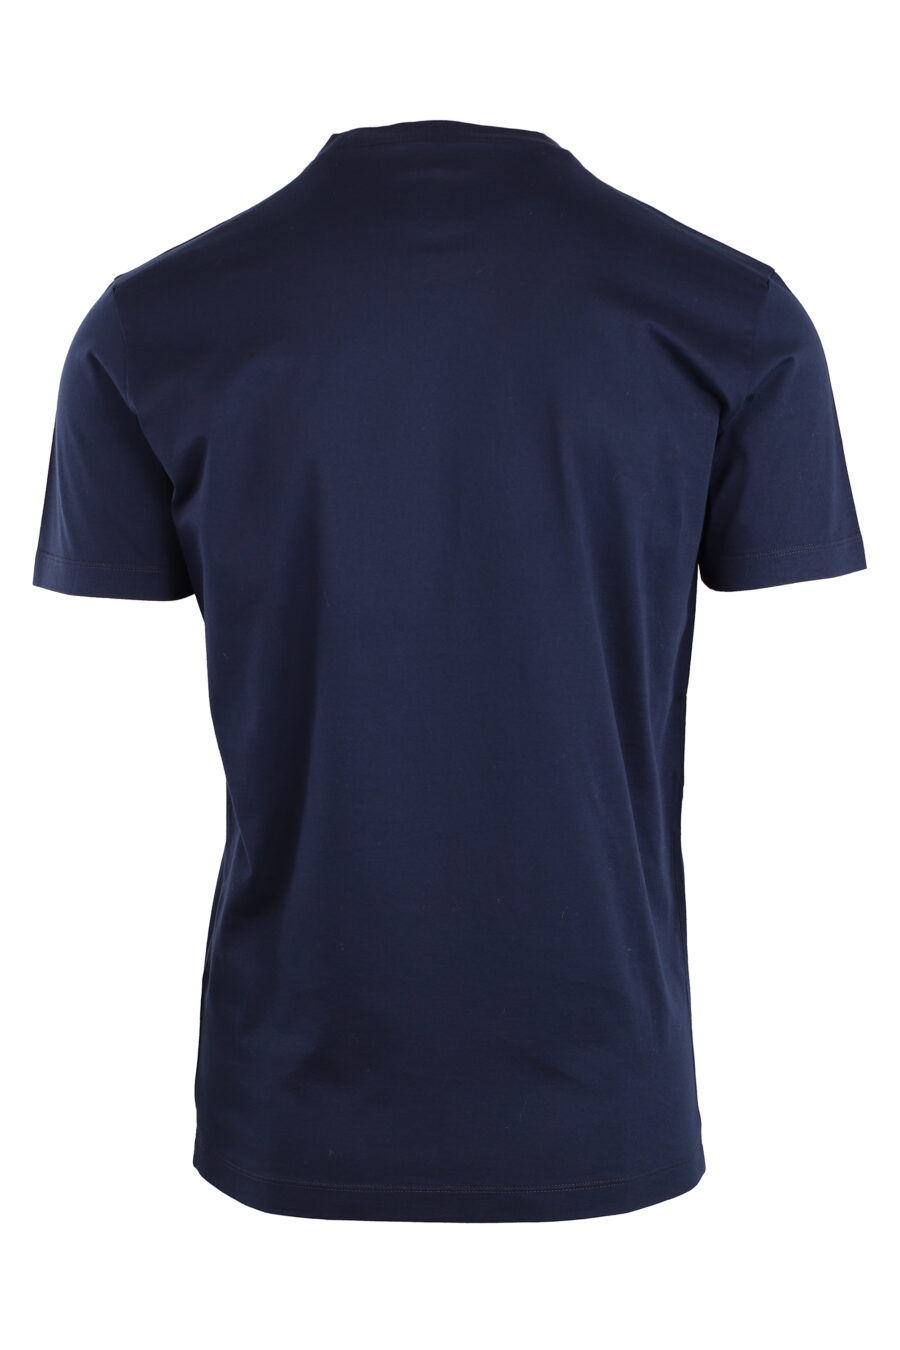 Dunkelblaues T-Shirt mit Mini-Logo "ceresio 9" - IMG 8950